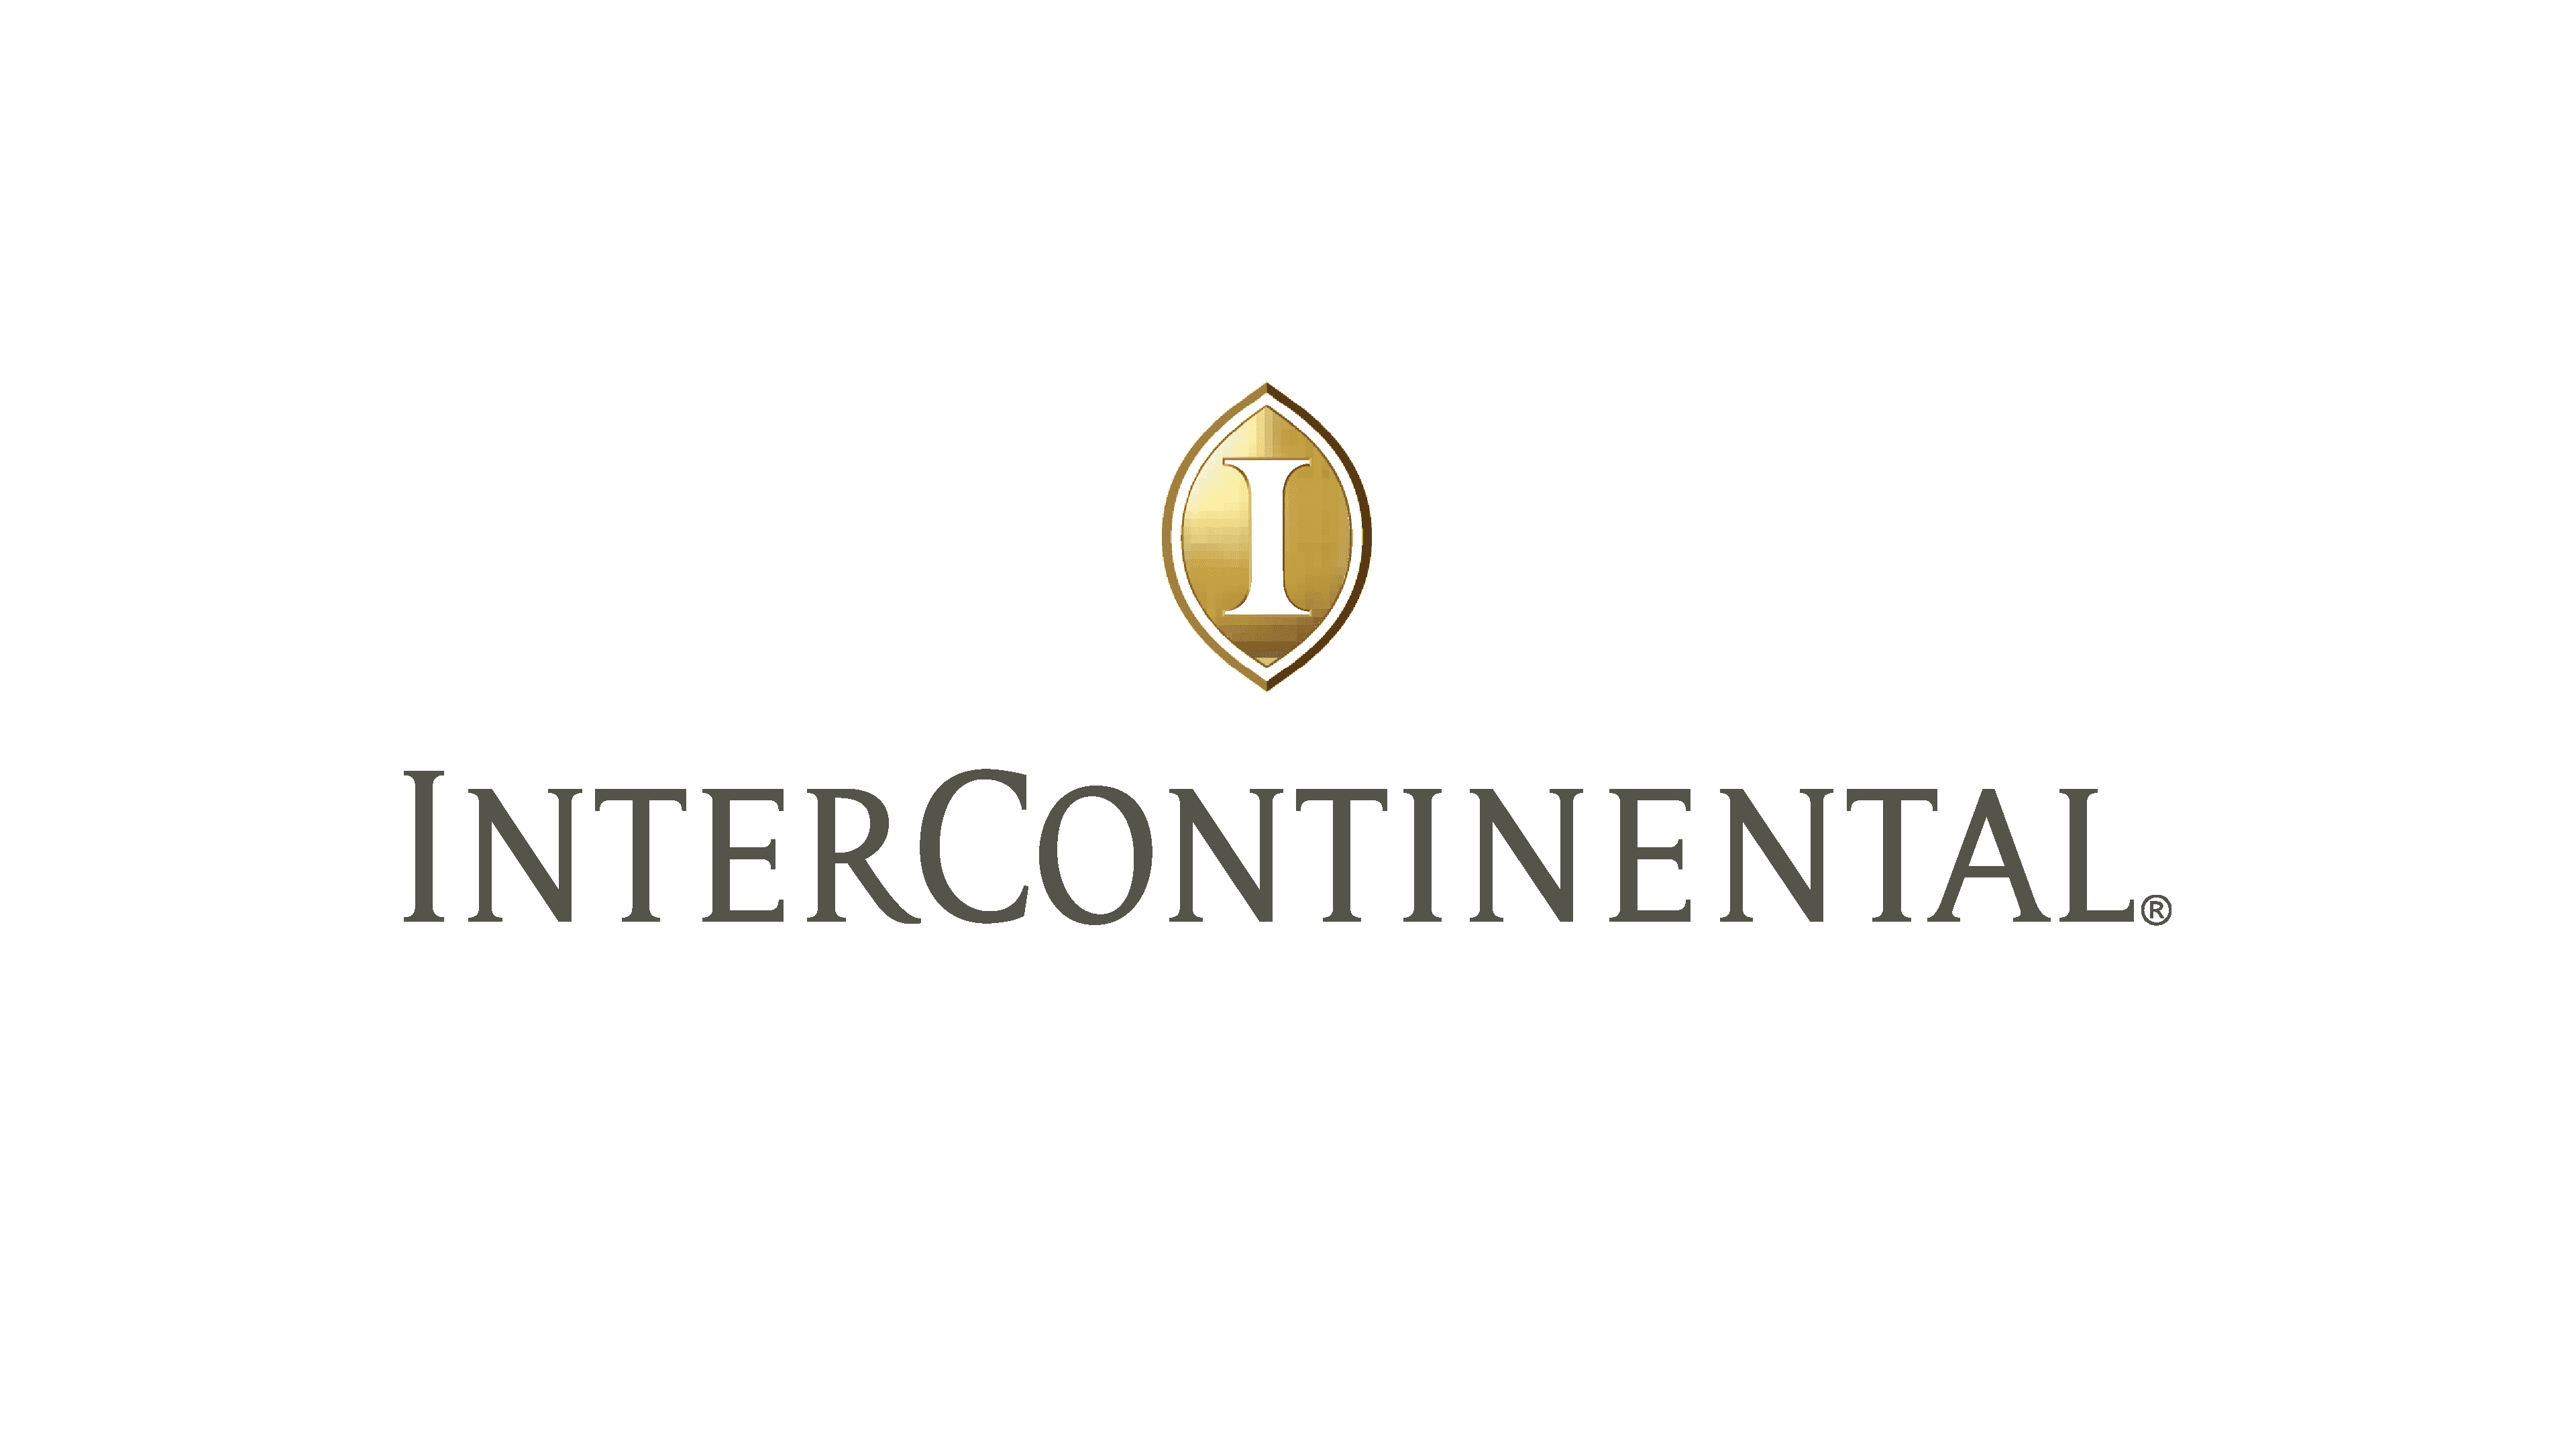 Inter Continental logo